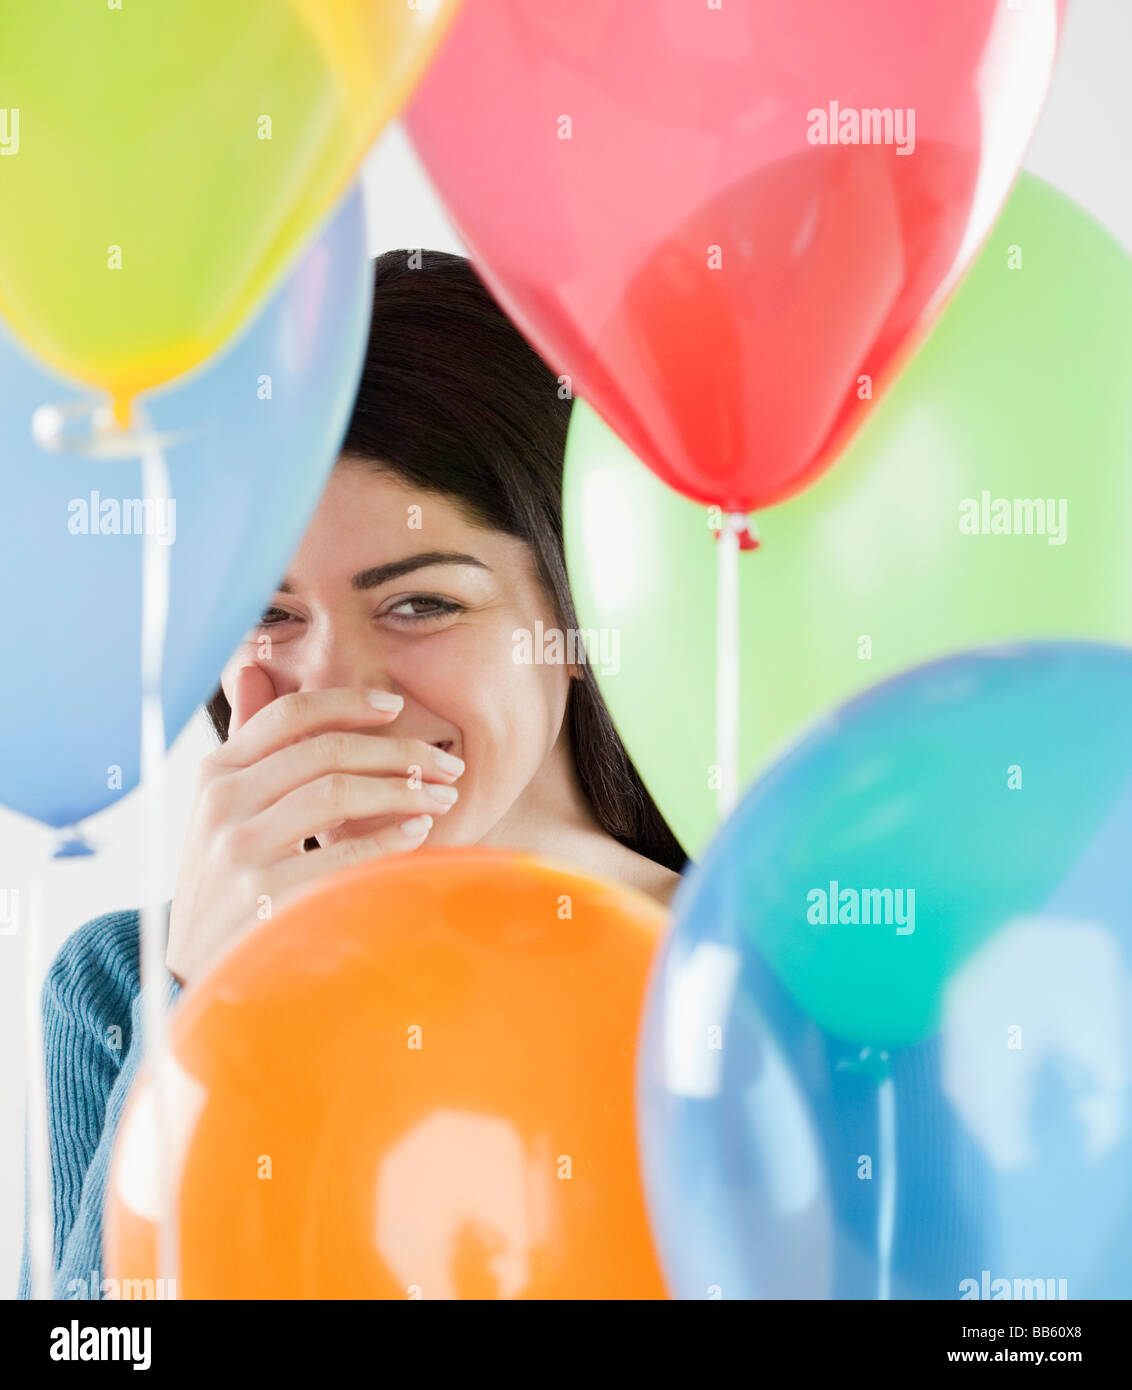 Hispanic woman laughing behind balloons Stock Photo